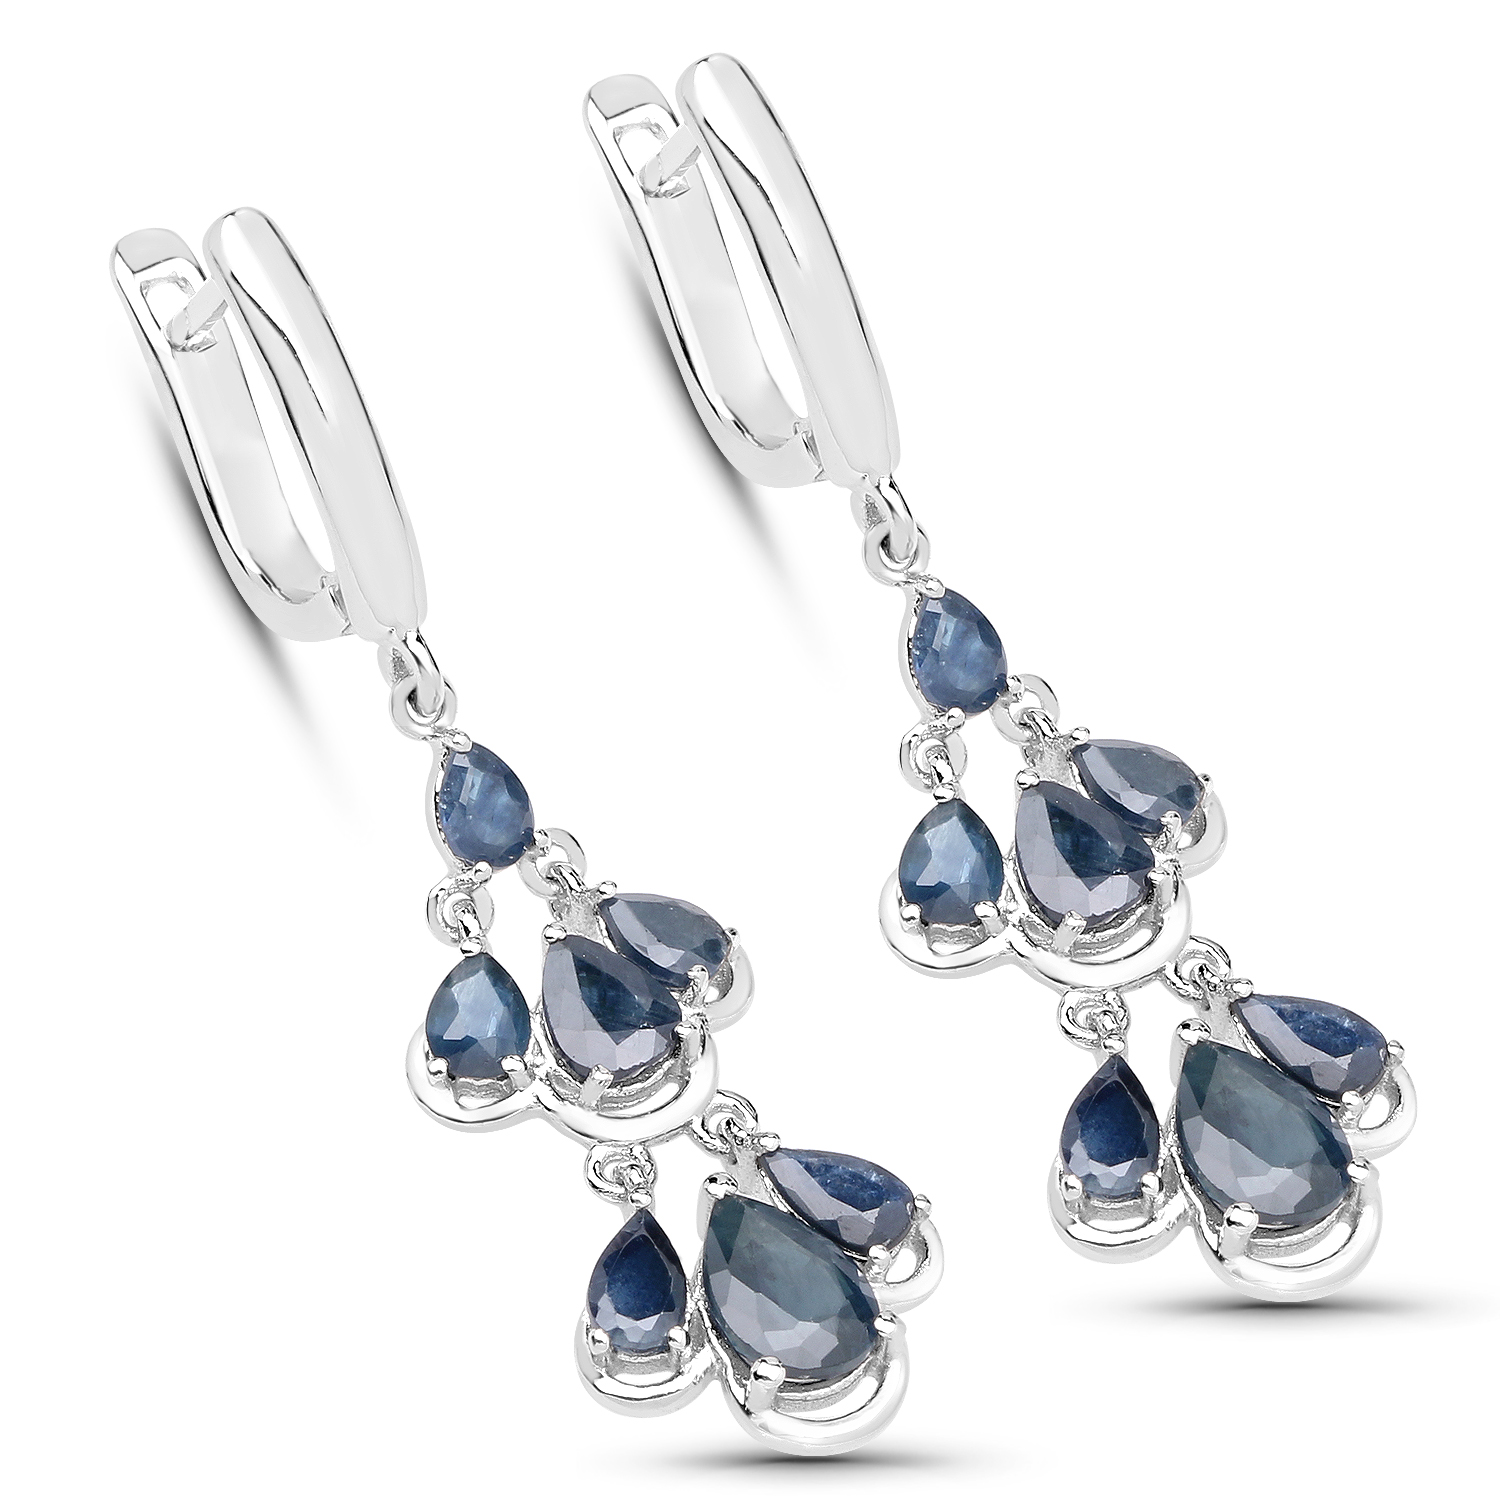 Quintessence Jewelry Blue Sapphire Pear/7x5mm - 2/1.60 ctw Natural Heat Treated E + Blue Sapphire Pear/5x4mm - 2/0.64 ctw Natural Heat Treated E + Bl